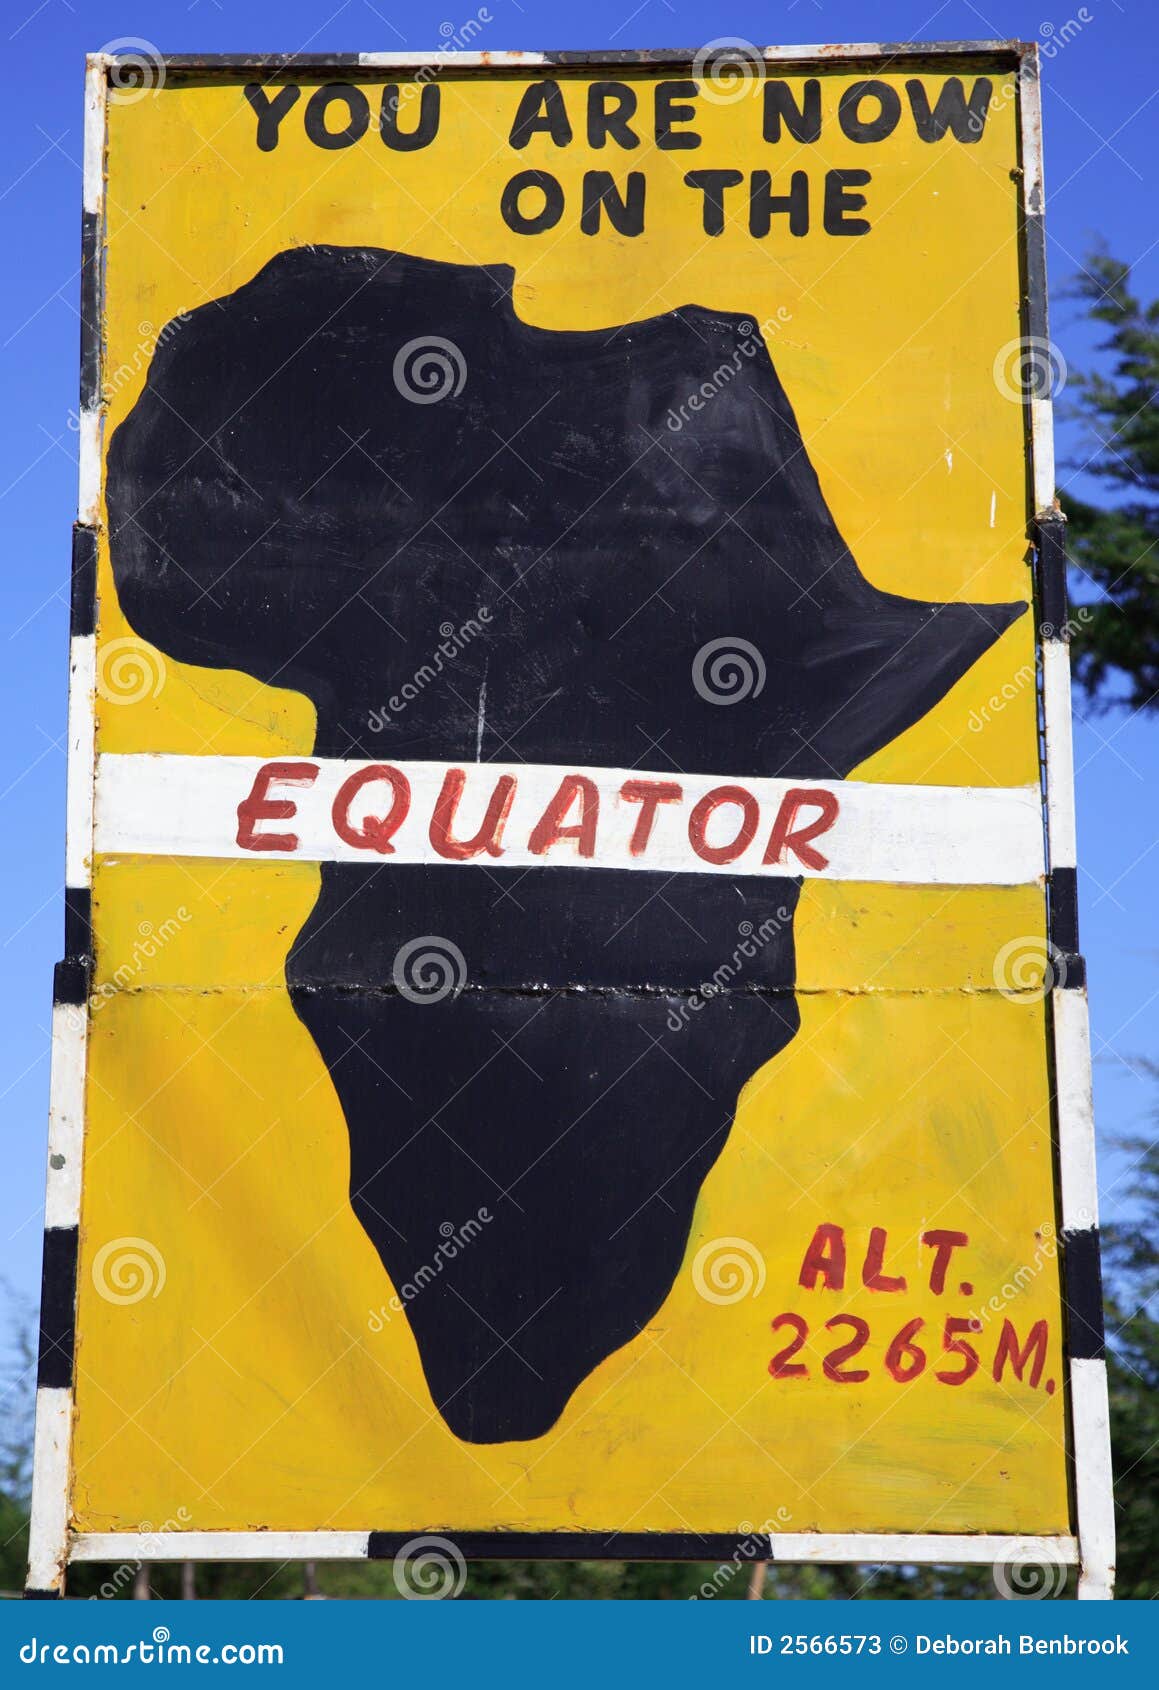 equator sign